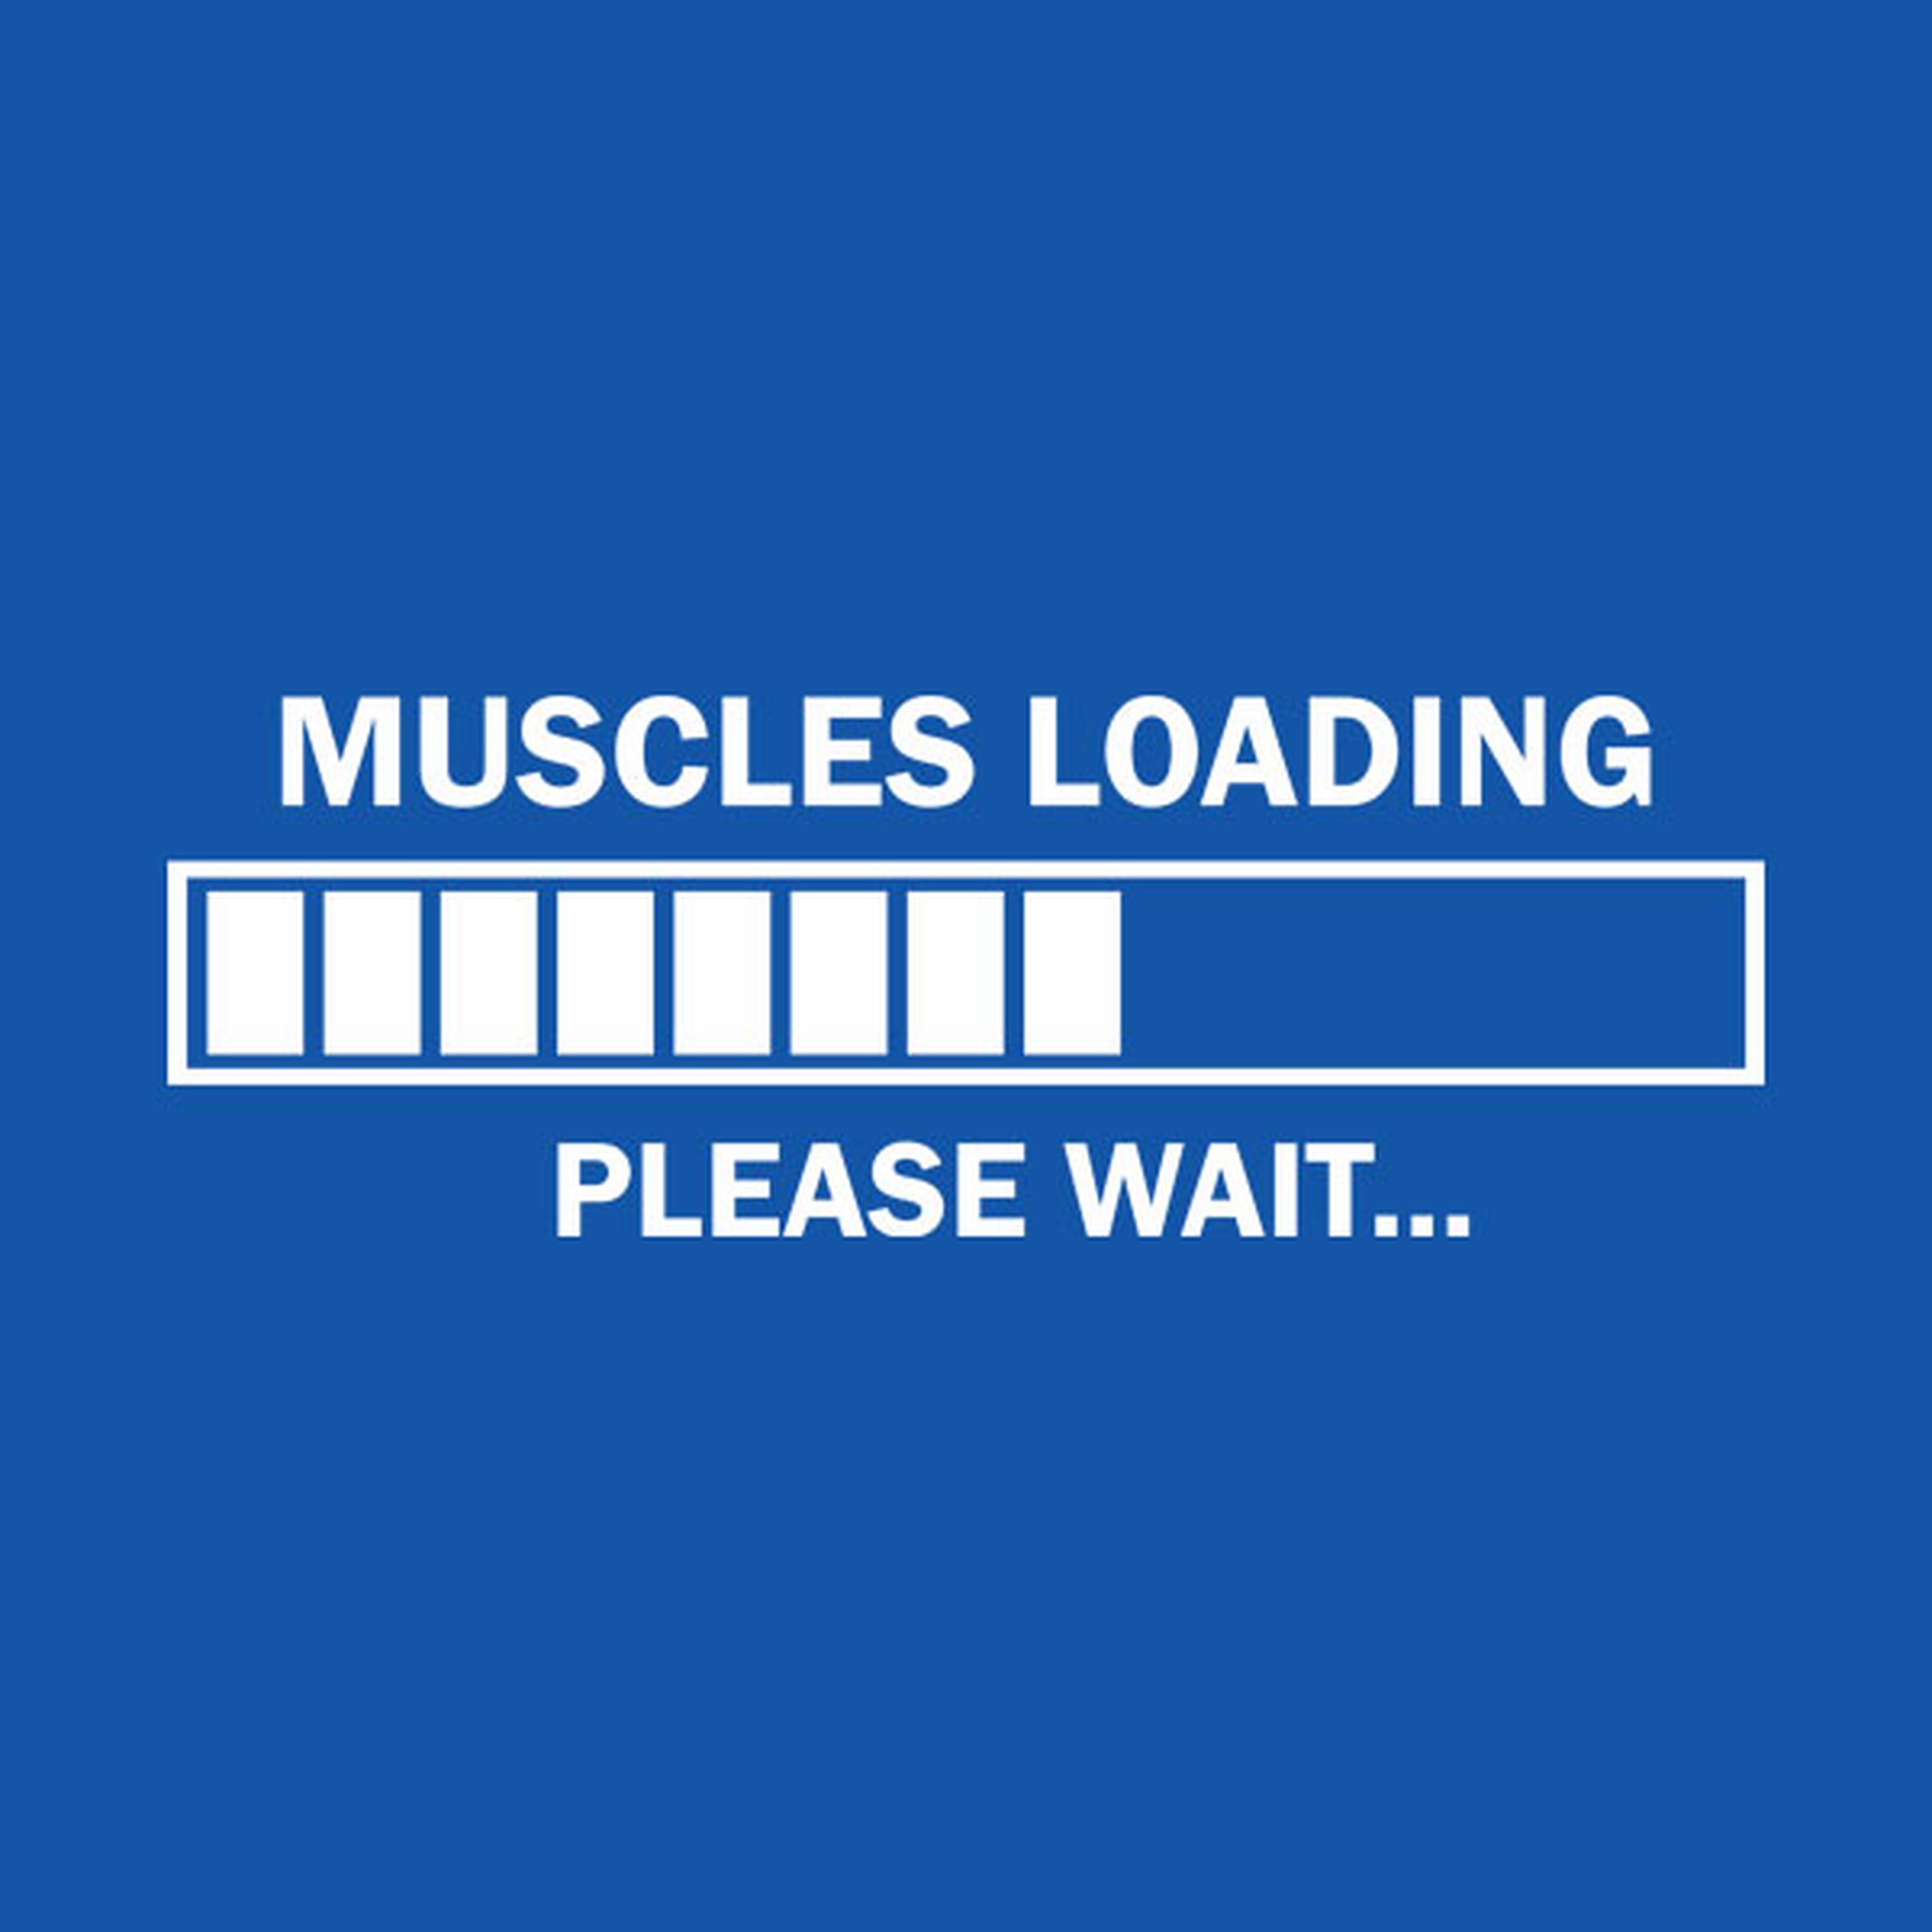 Muscles loading. Please wait. - T-shirt